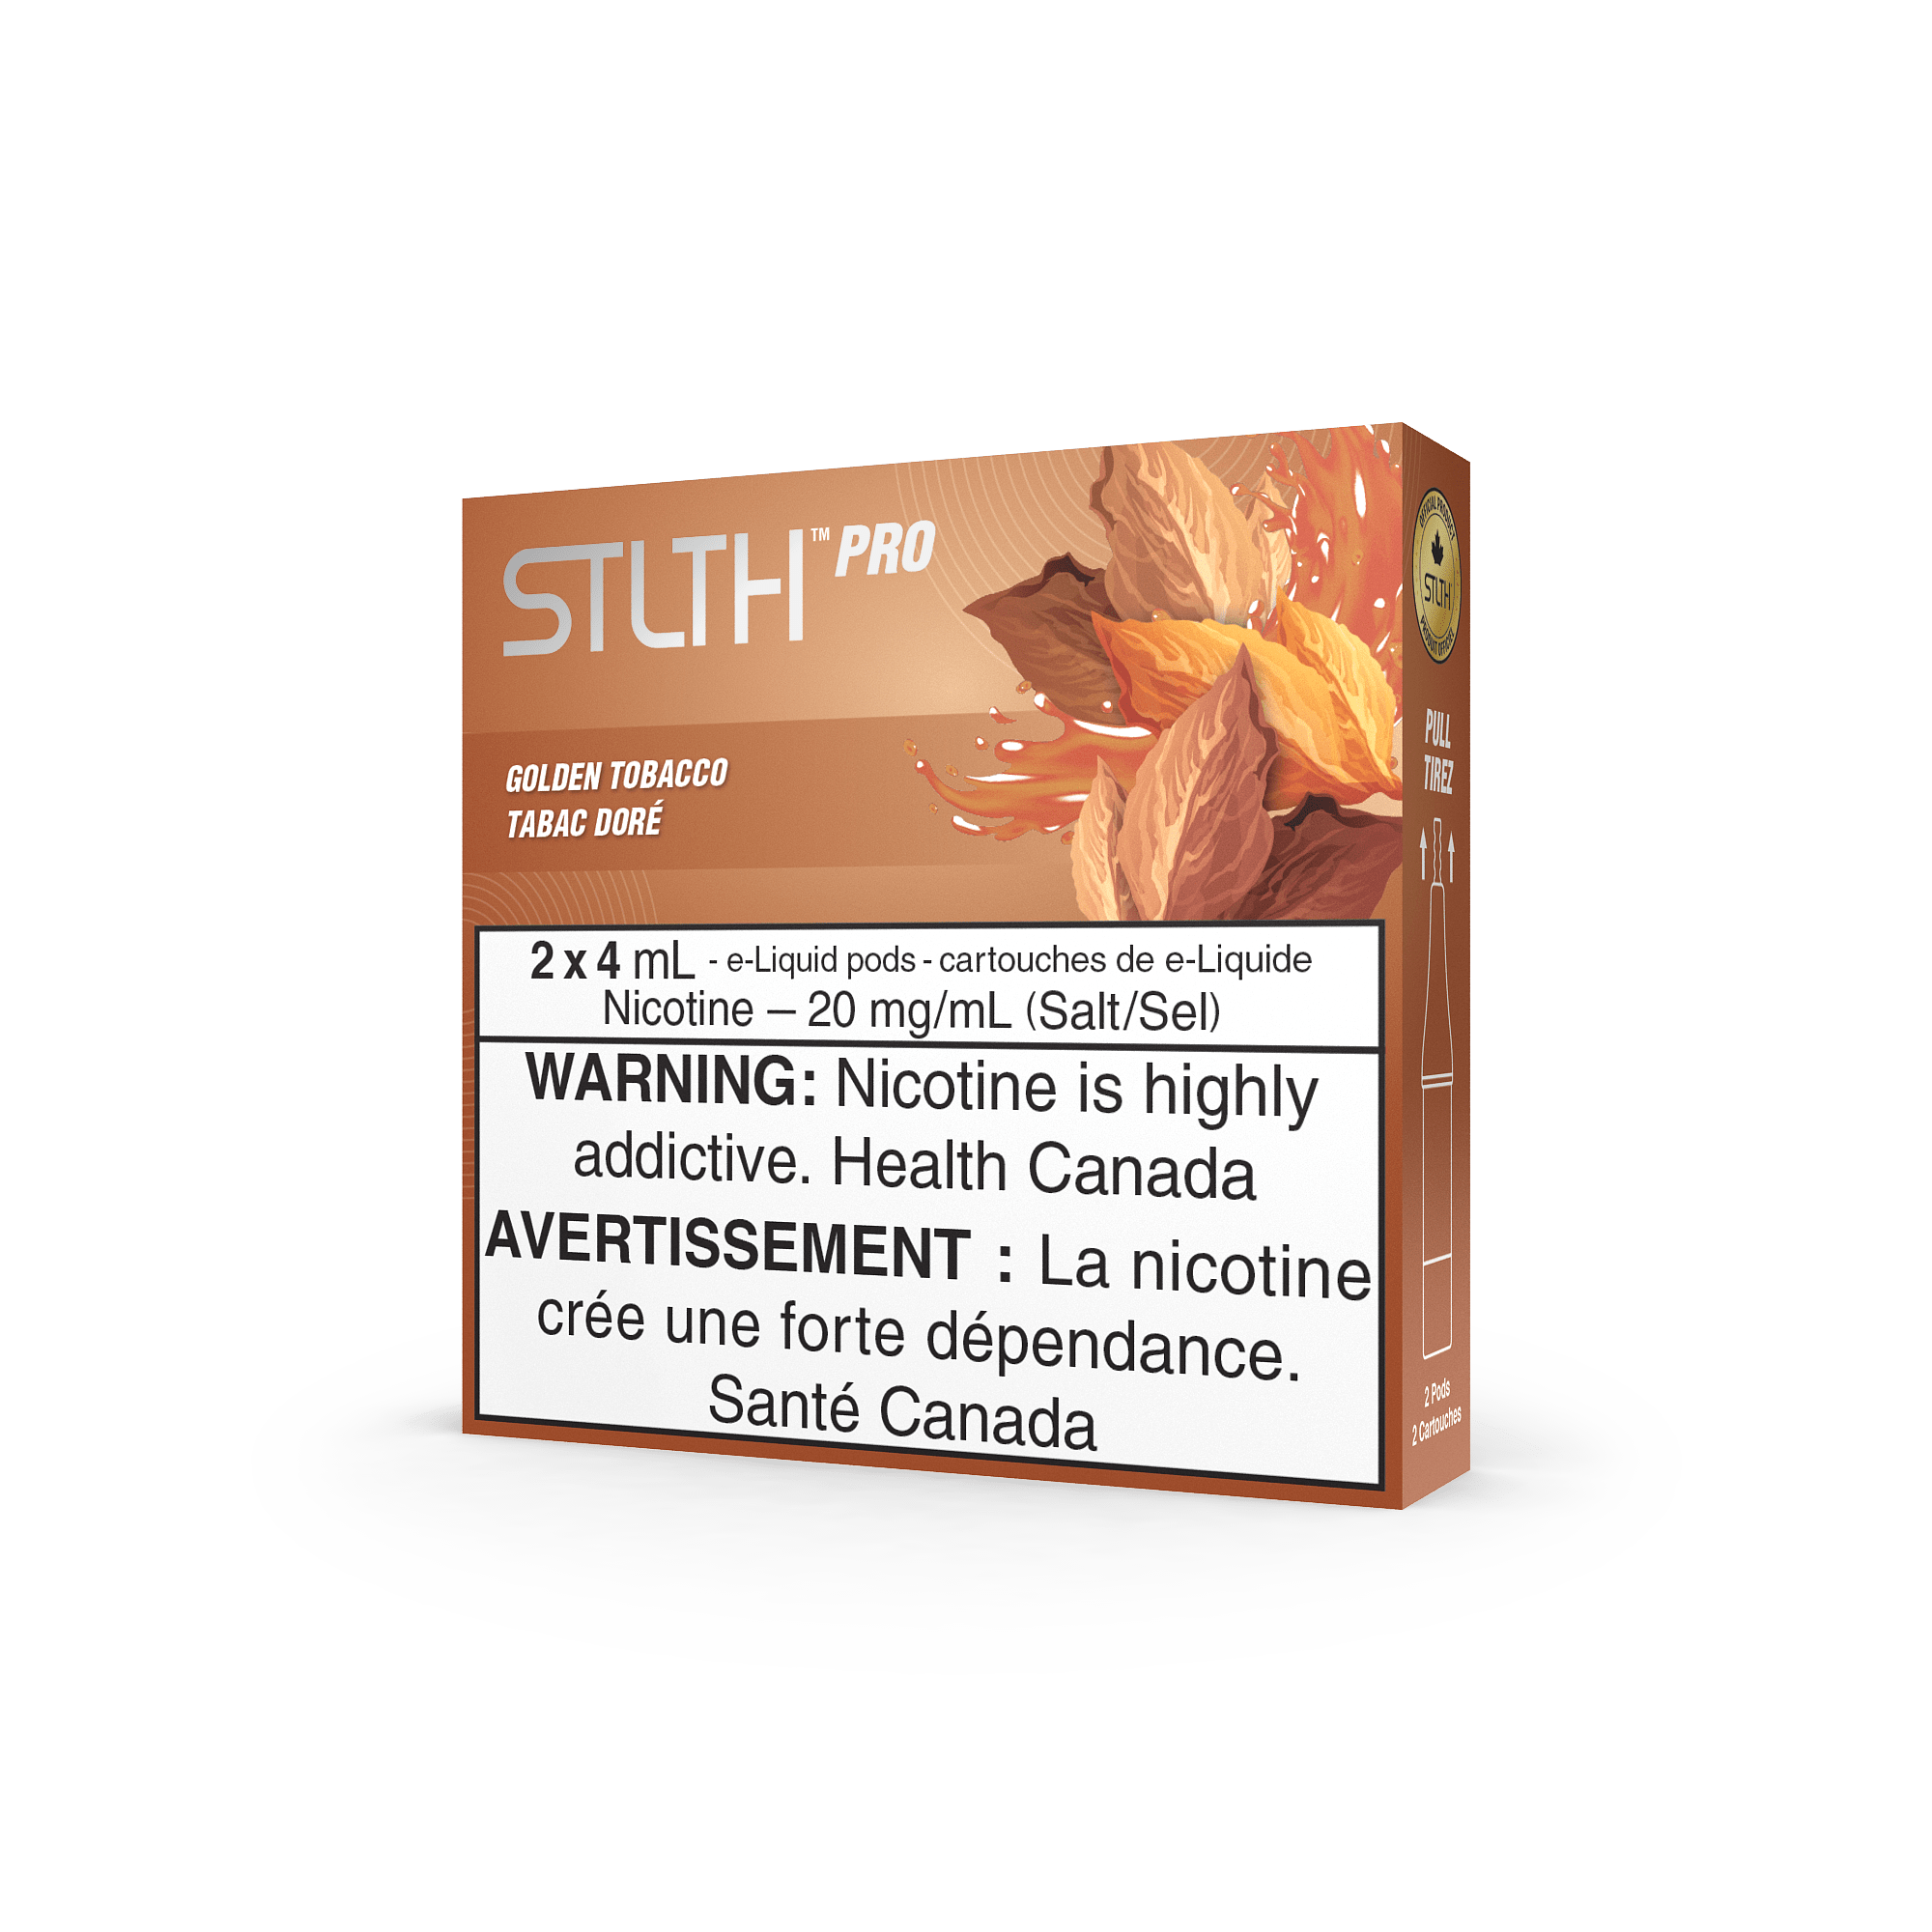 STLTH Pro - Golden Tobacco Vape Pod available on Canada online vape shop